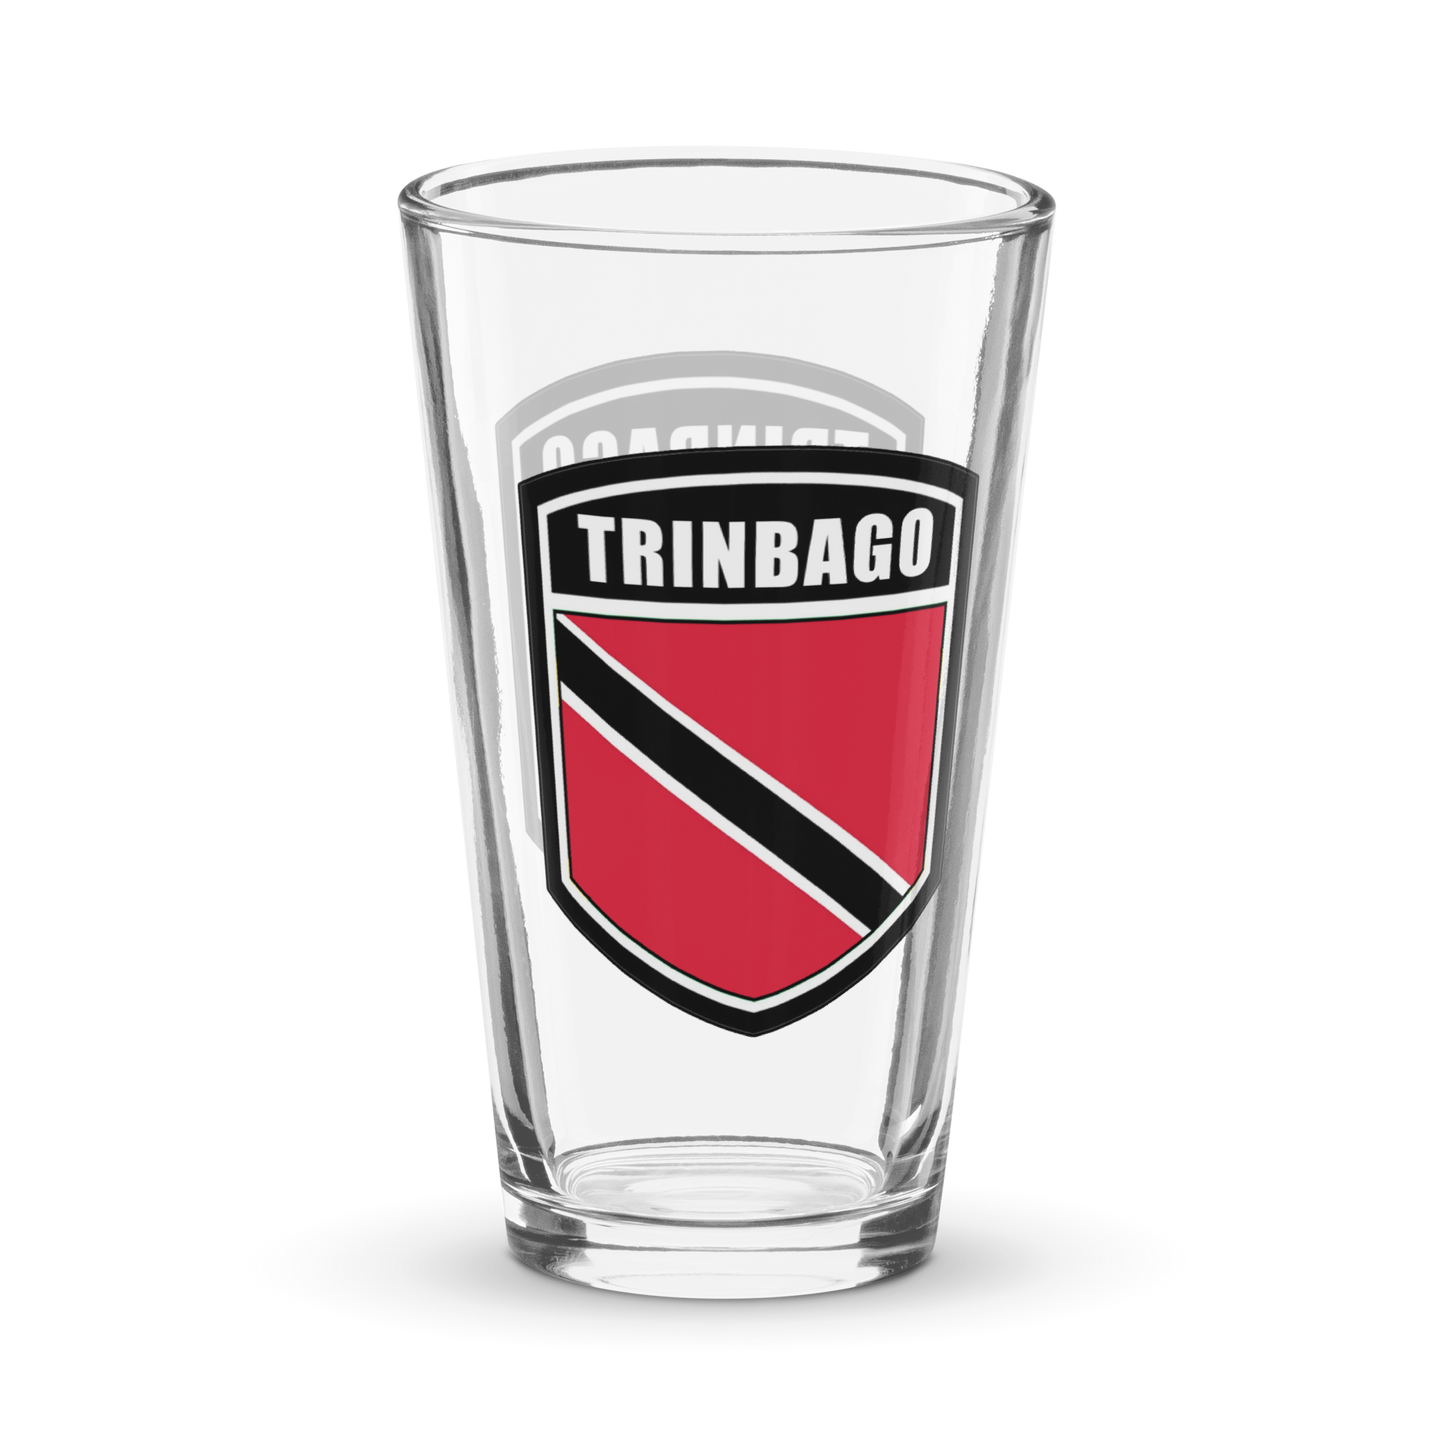 Trinbago Shaker pint glass